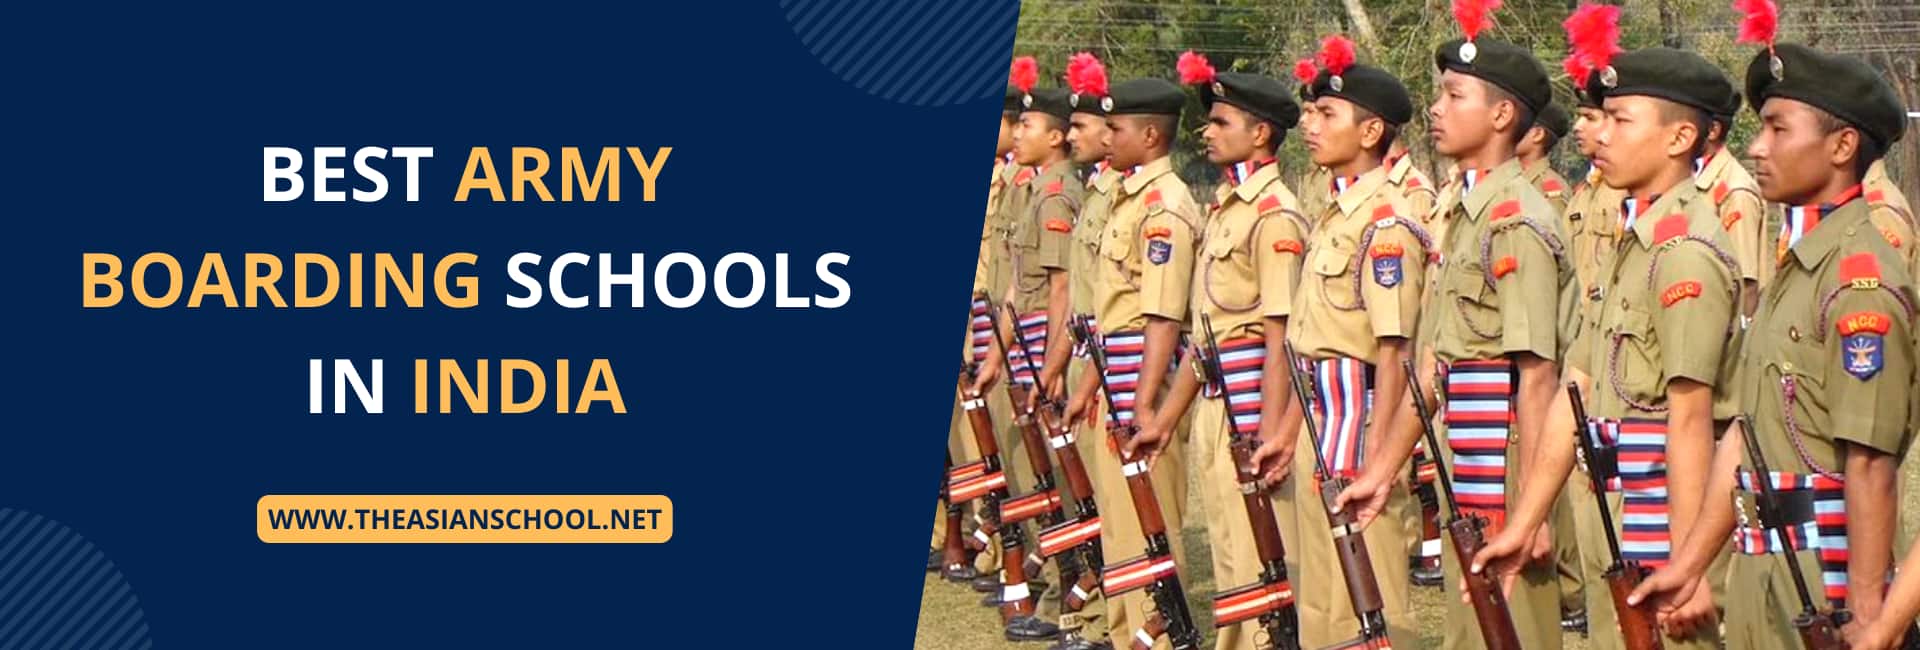 Best Army Boarding Schools in India